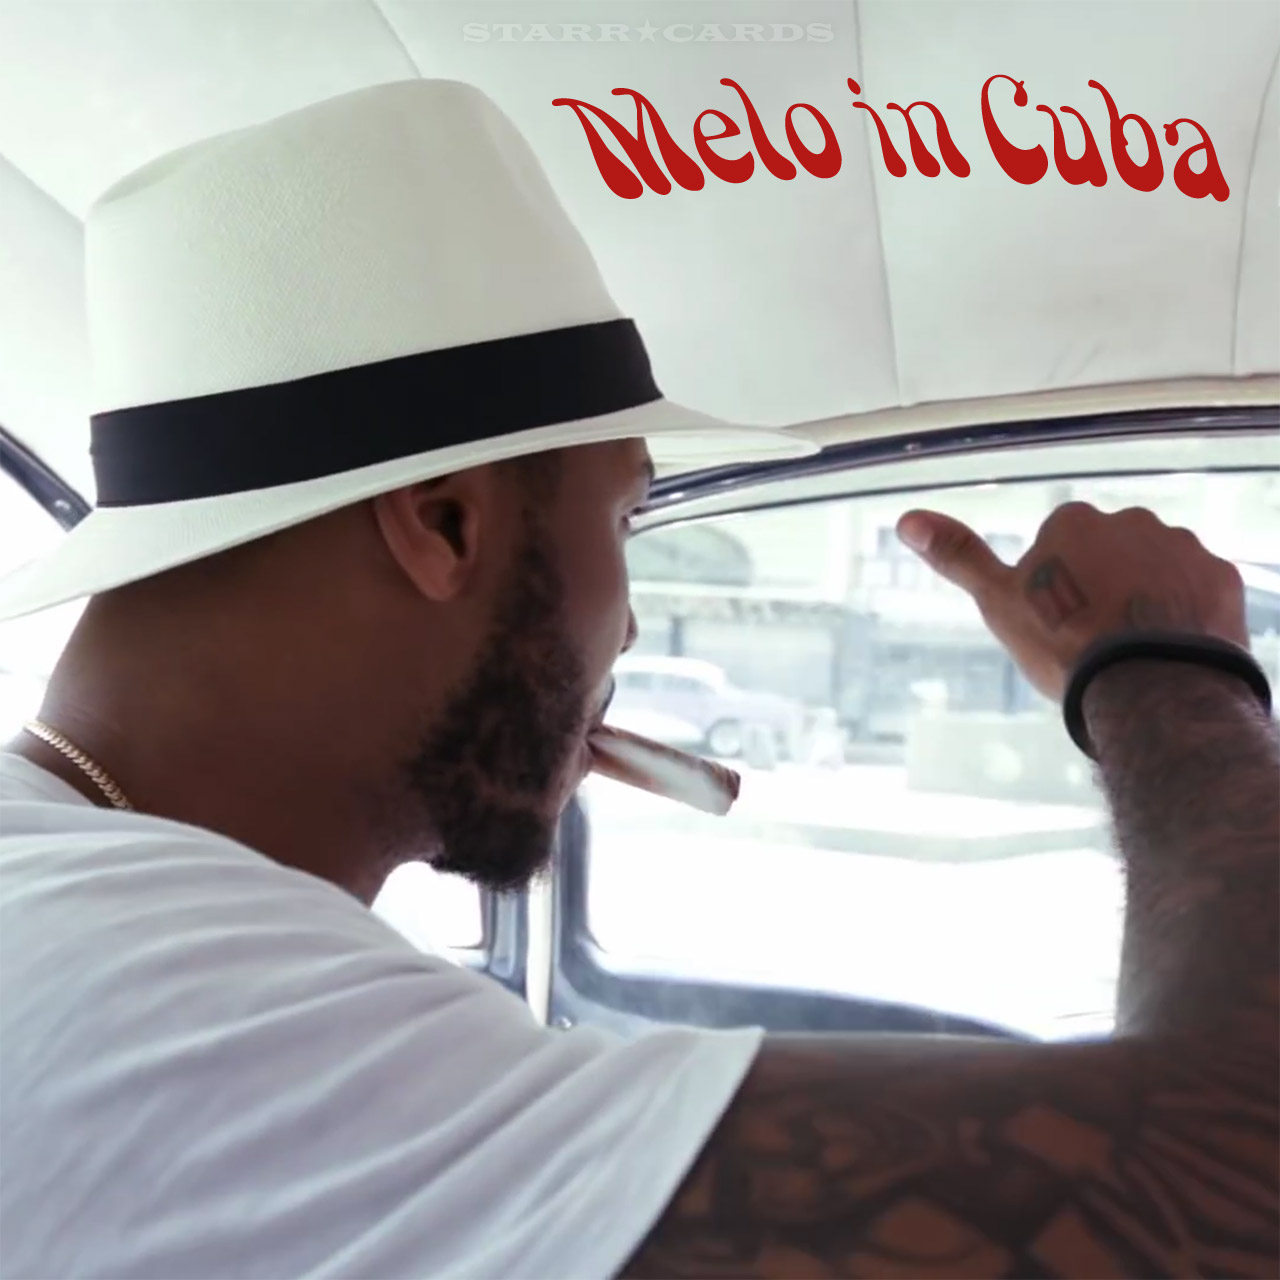 Carmelo Anthony in Cuba